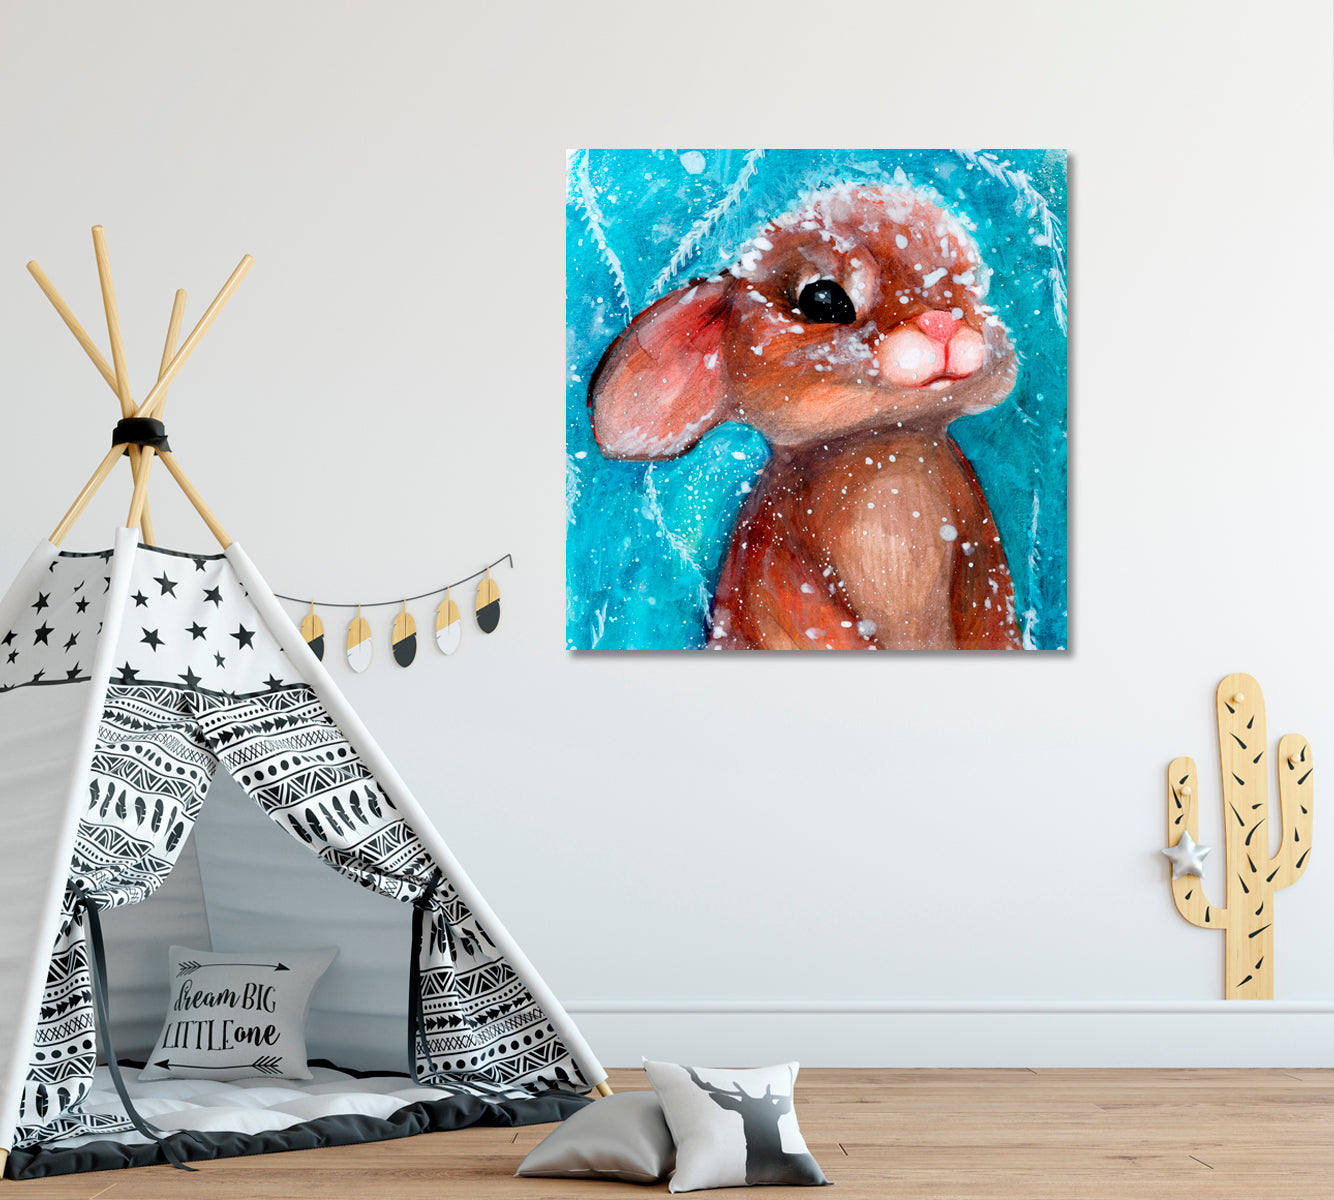 Cute Bunny in Snow Canvas Print ArtLexy   